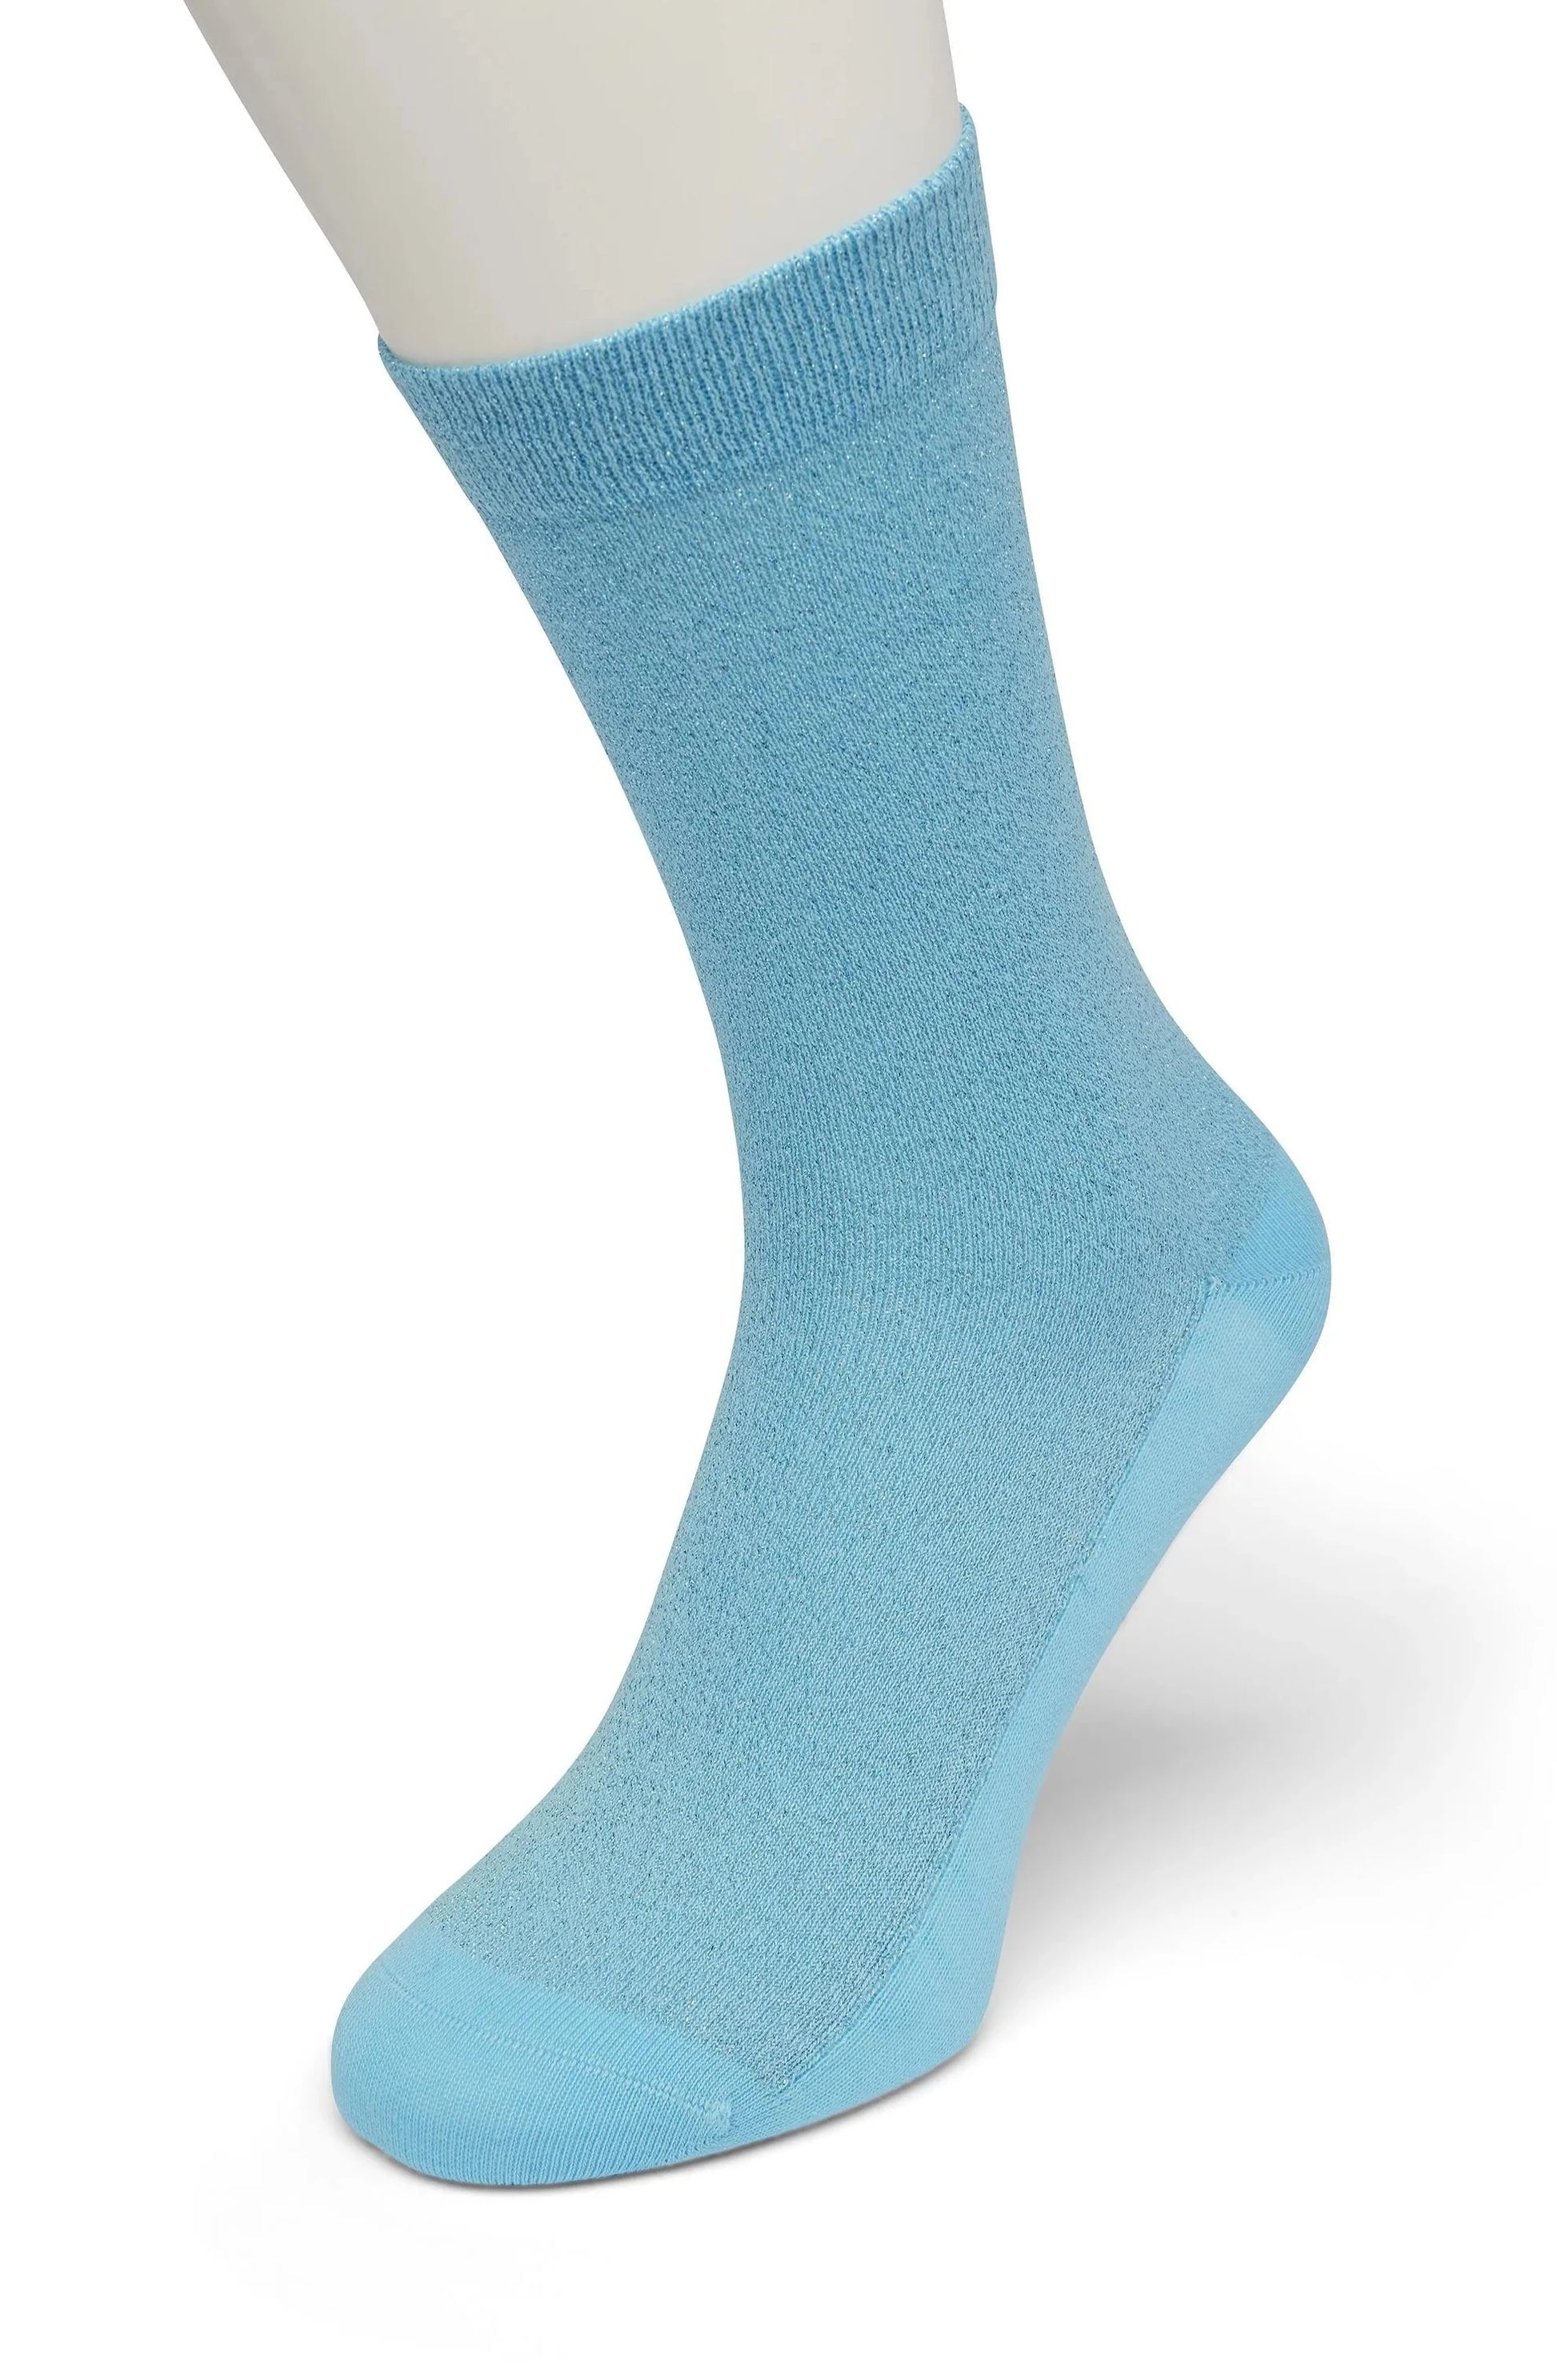 Bonnie Doon BP051138 Cotton Sparkle Socks - light sky blue socks with aqua marine sparkly glitter lam̩ lurex